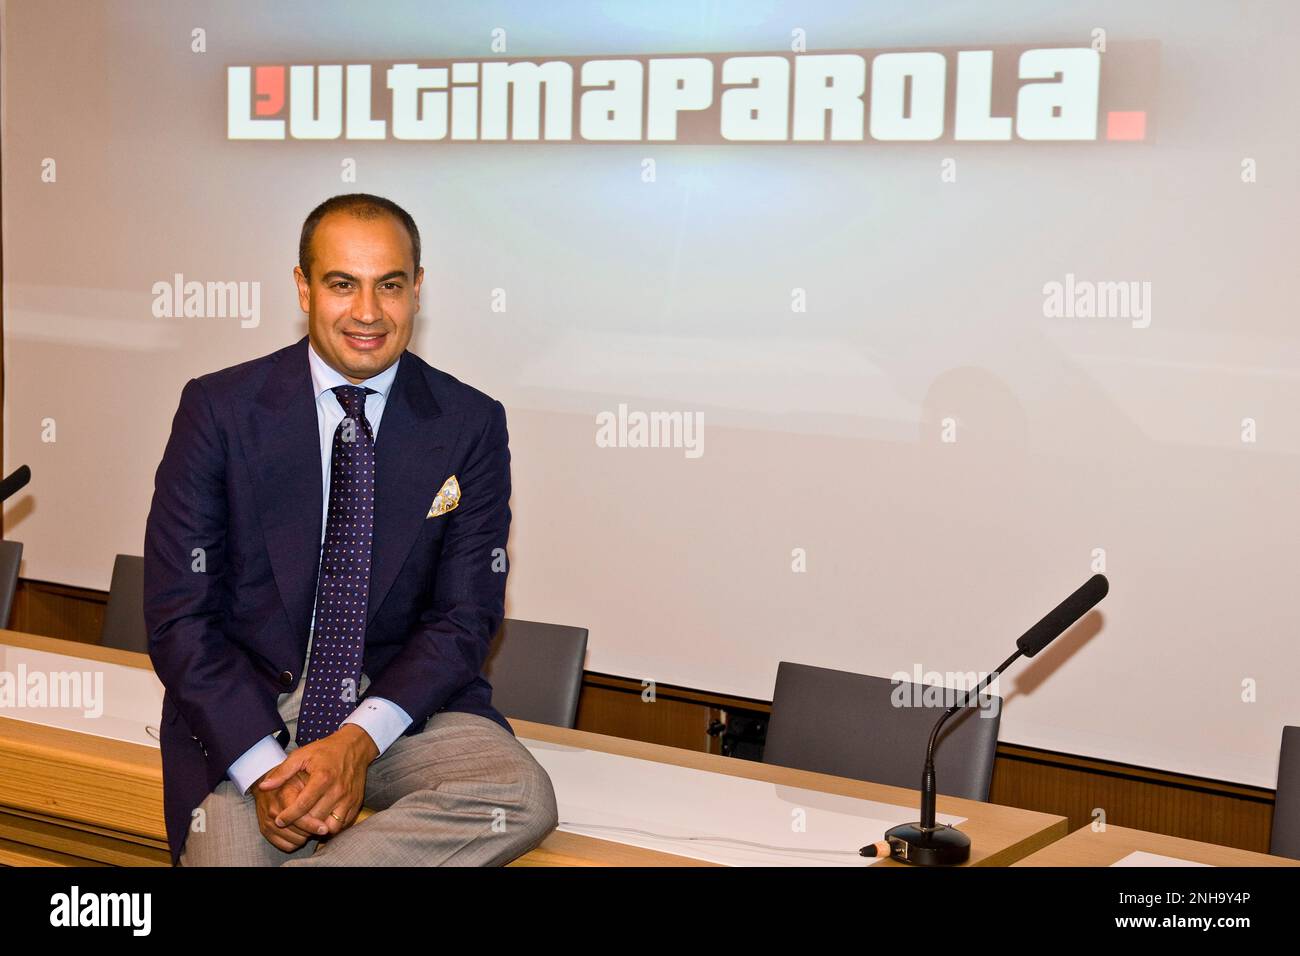 Der Moderator Gianluigi Paragone, "L'ultima Parola", Pressekonferenz, Milan 15.09.2010 Stockfoto